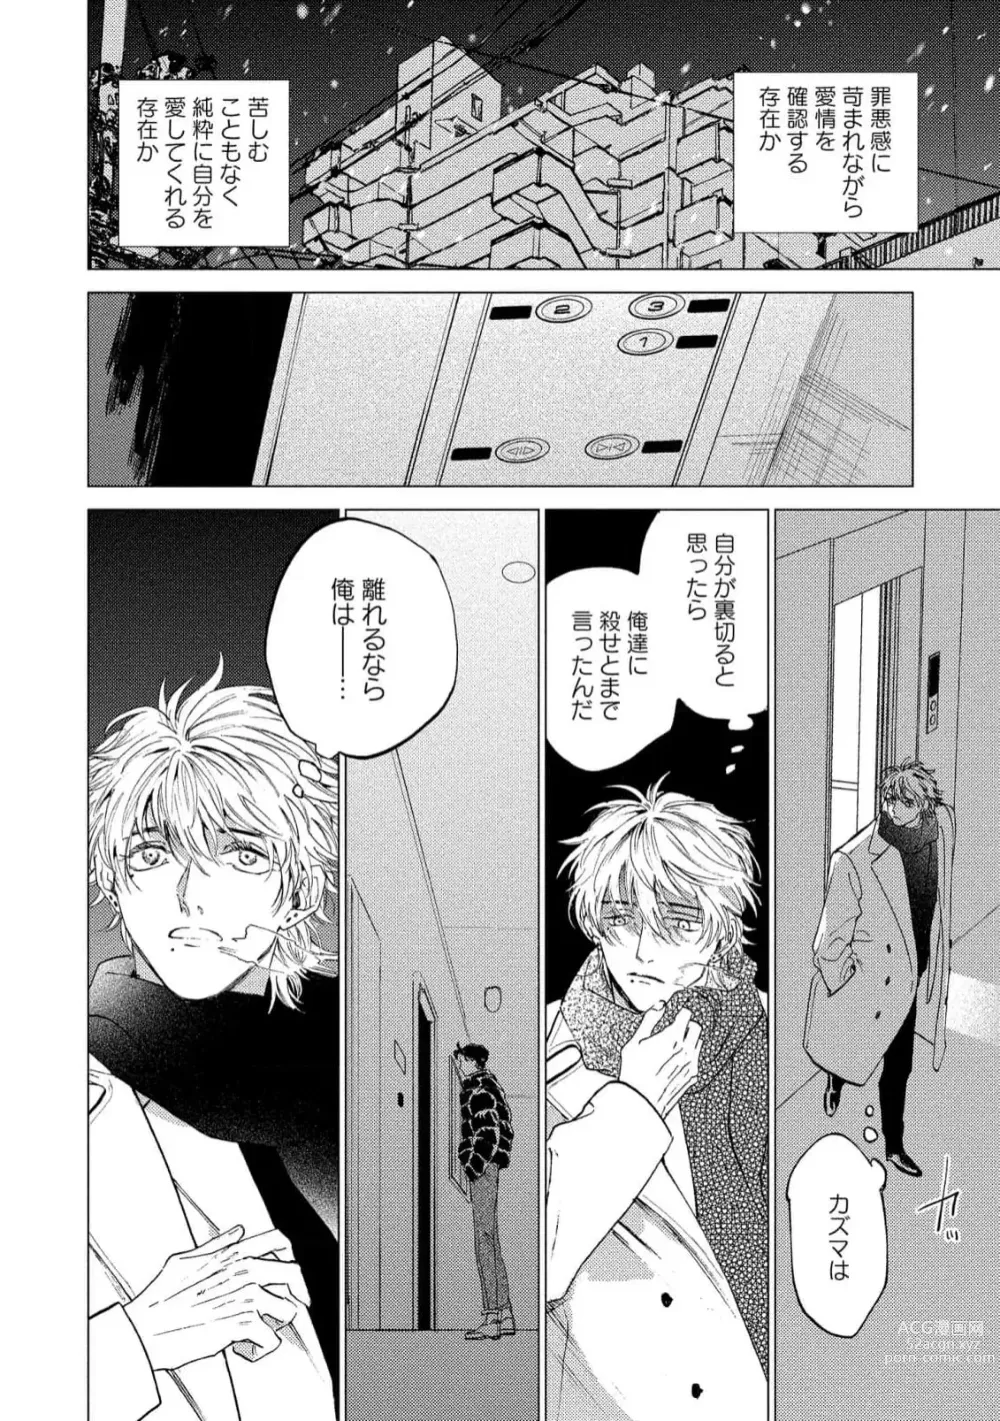 Page 14 of manga Fukushuu ga Tokenai